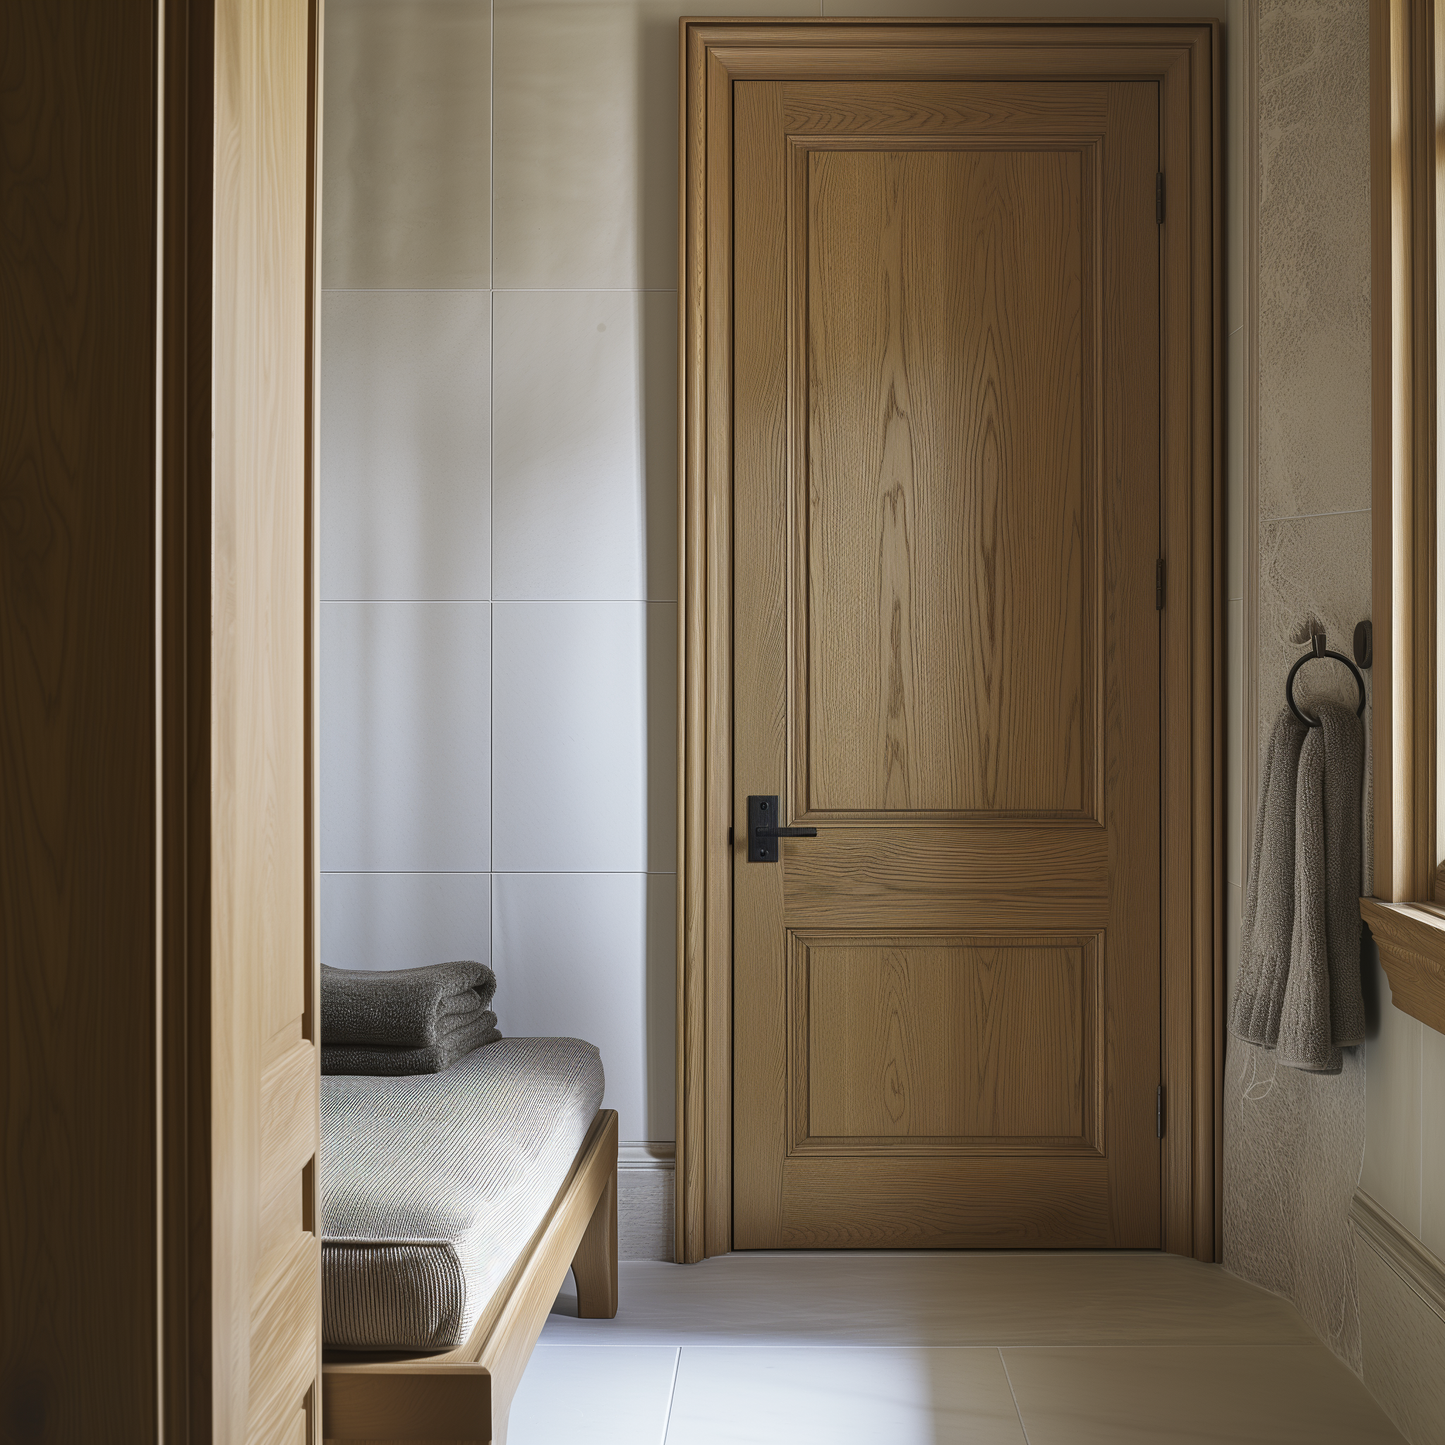 fern classic solid wood oak bespoke customizable fully custom made to order interior door in a beautiful bathroom entryway